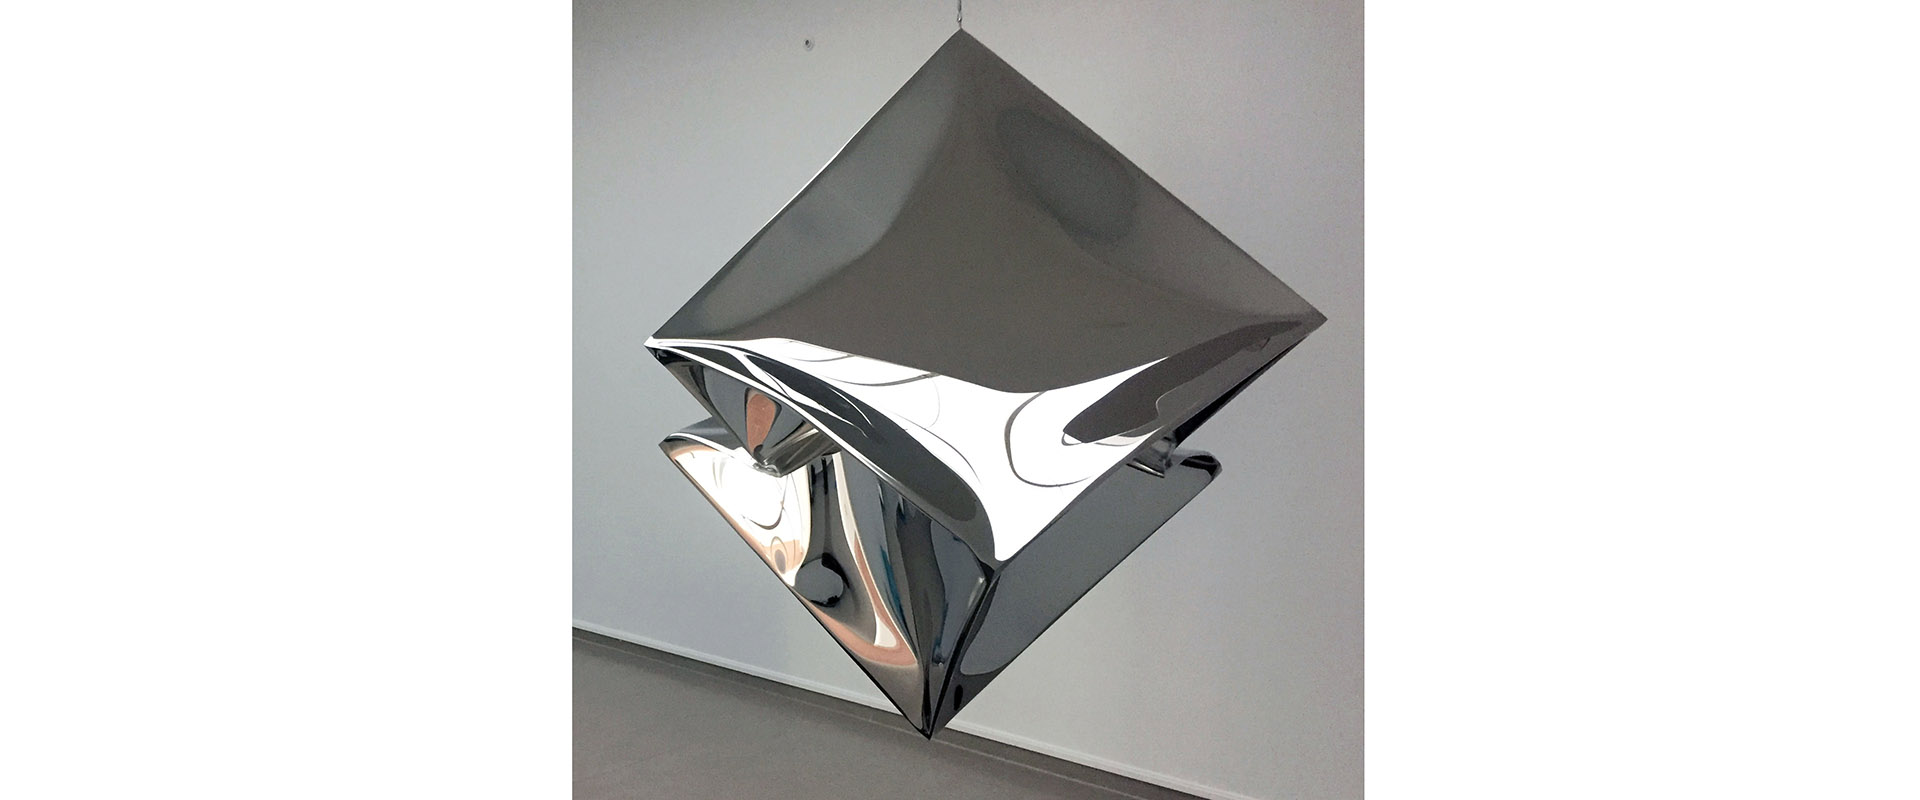 HP Hanging Cube - 2020, #200201, Spiegelpolierter Edelstahl, 66 x 66 x 66 cm